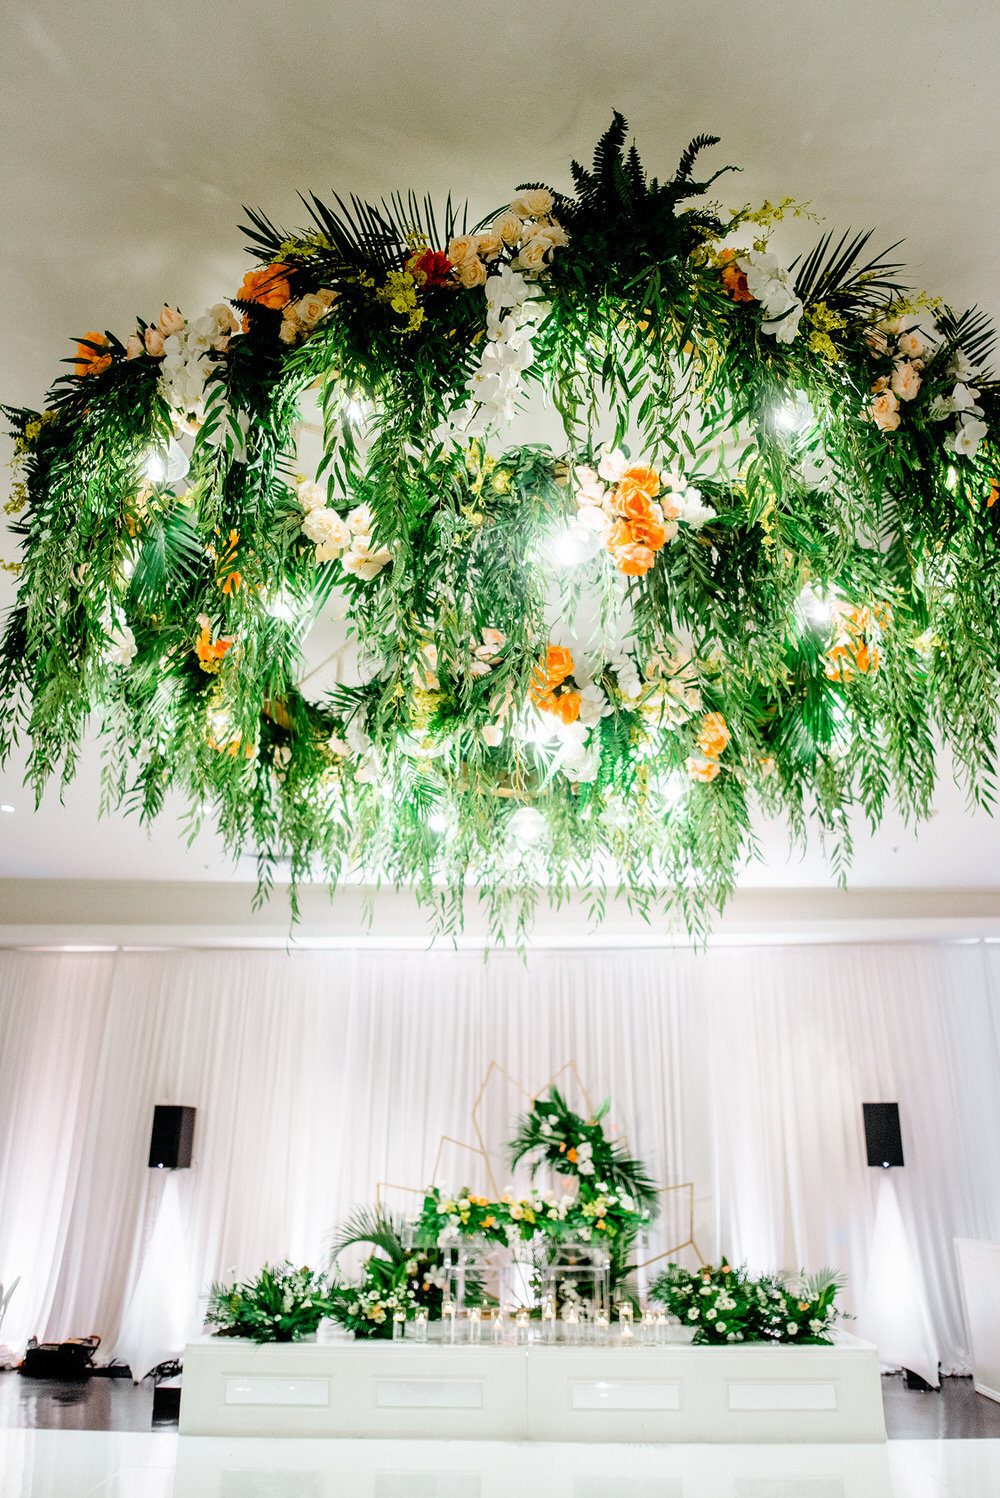 hanging greenery and lighting wedding reception decor 19 #wedding #weddings  #greenwedding #w…